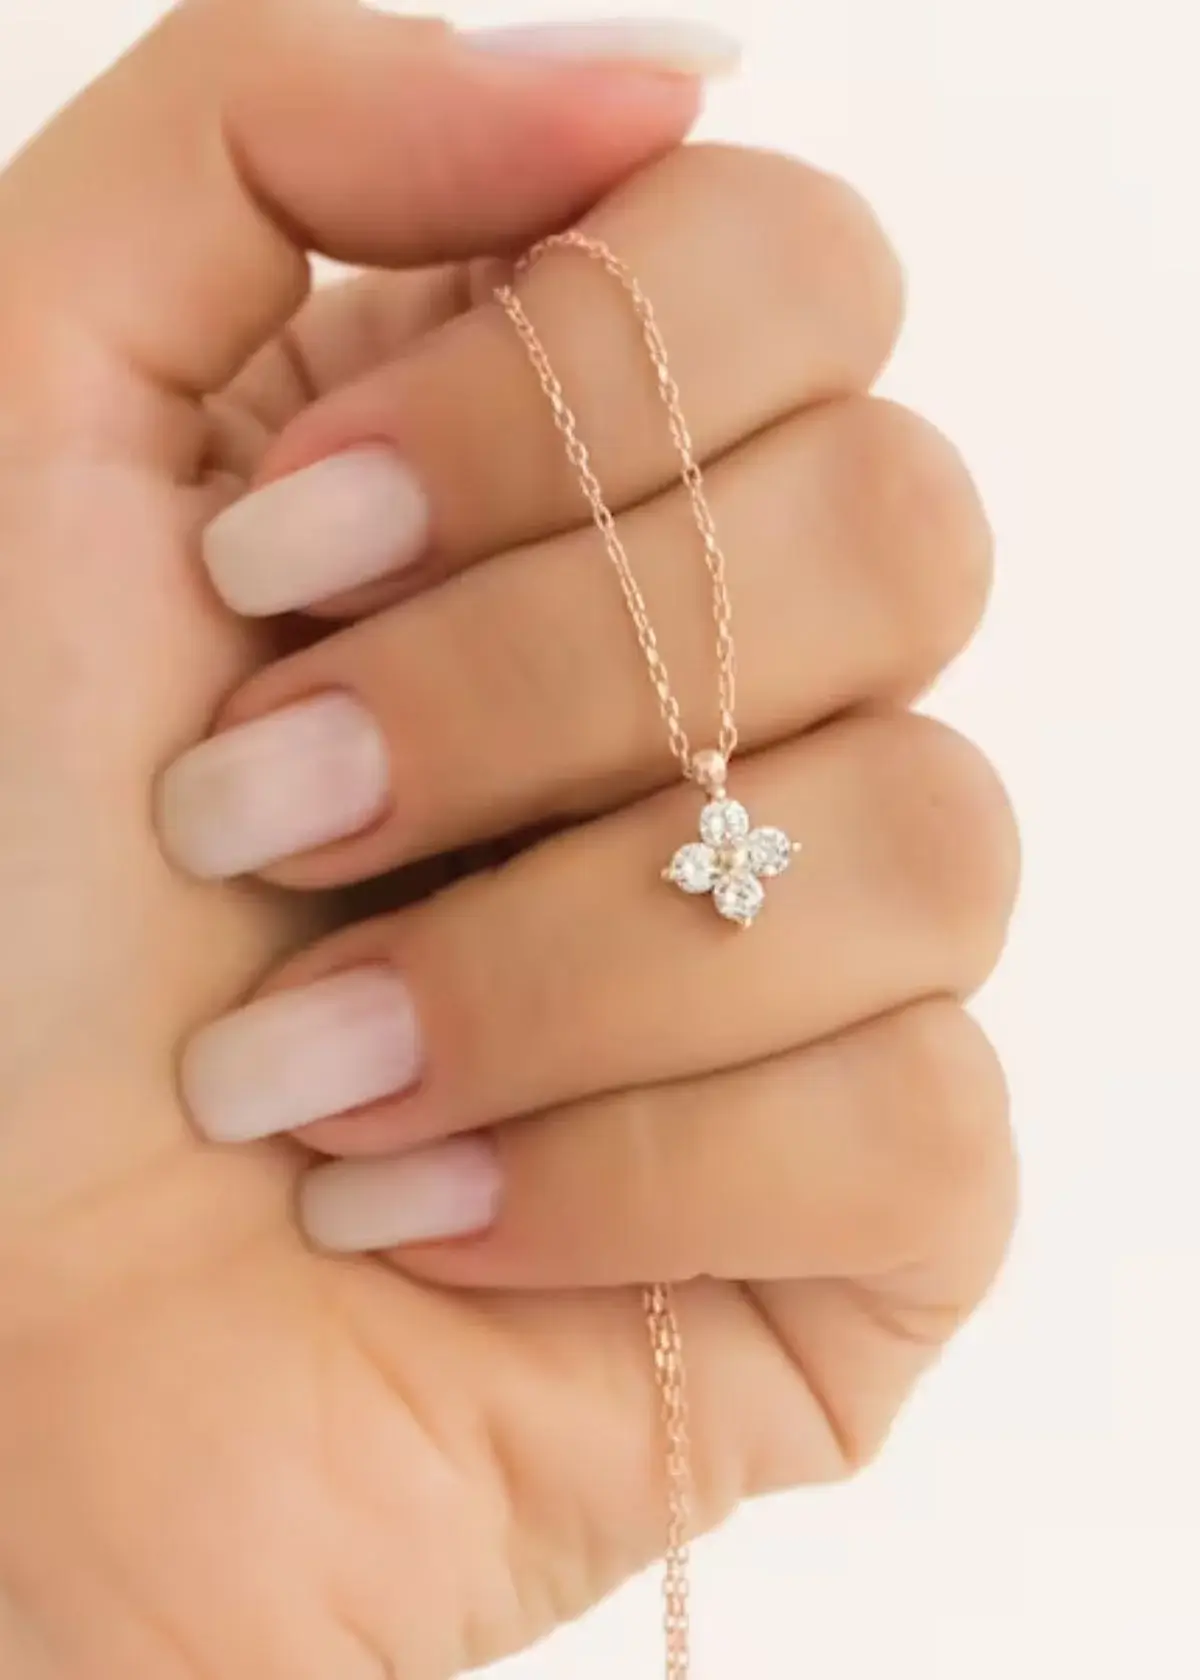 Do diamond flower necklaces require special care?